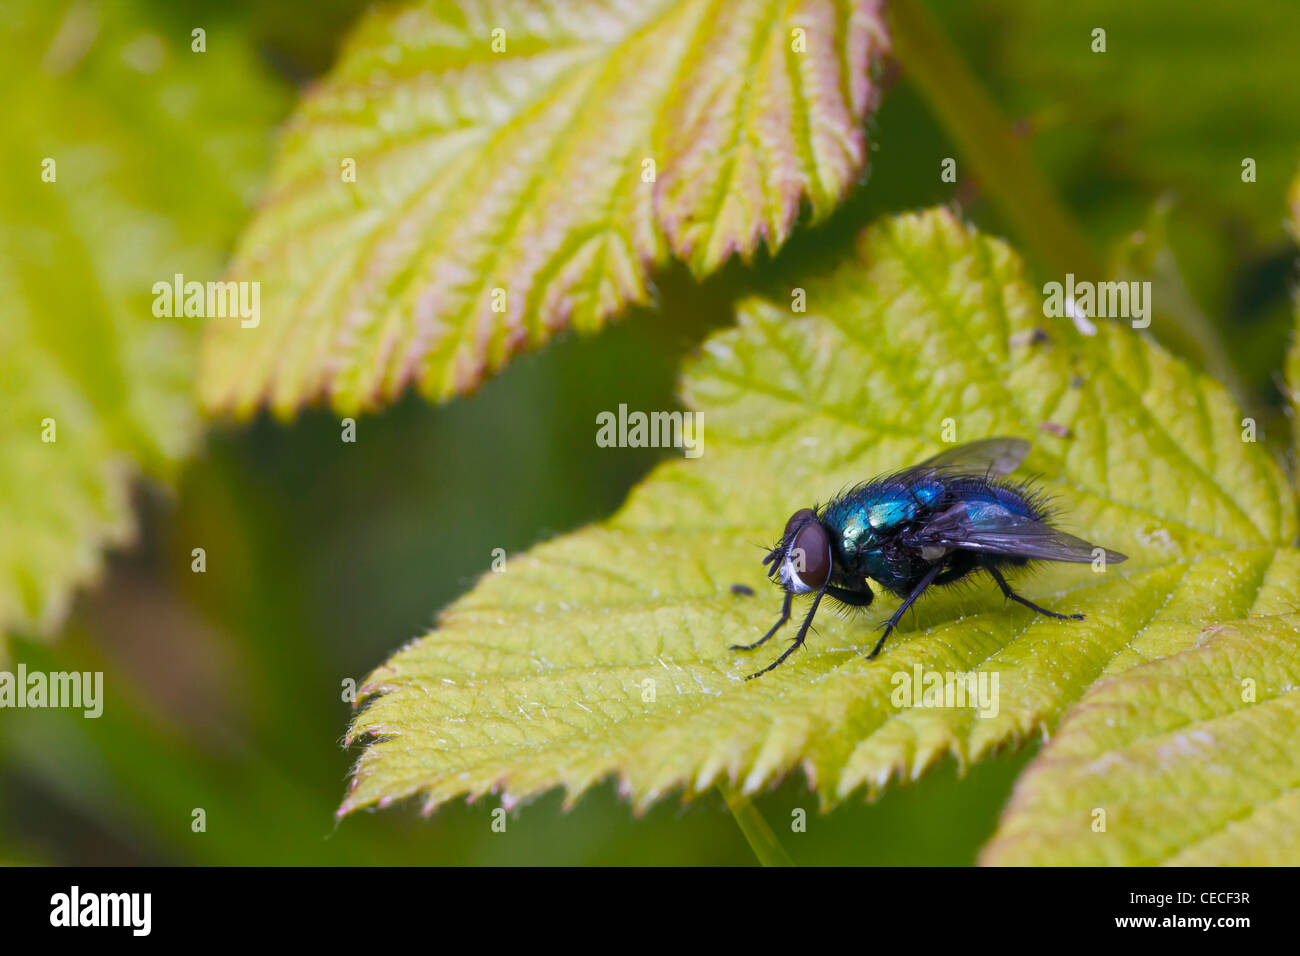 USA, Oregon, Eugene, Fern Ridge Wildlife Area, Blue Bottle Fly (Calliphora vomitoria) Stock Photo